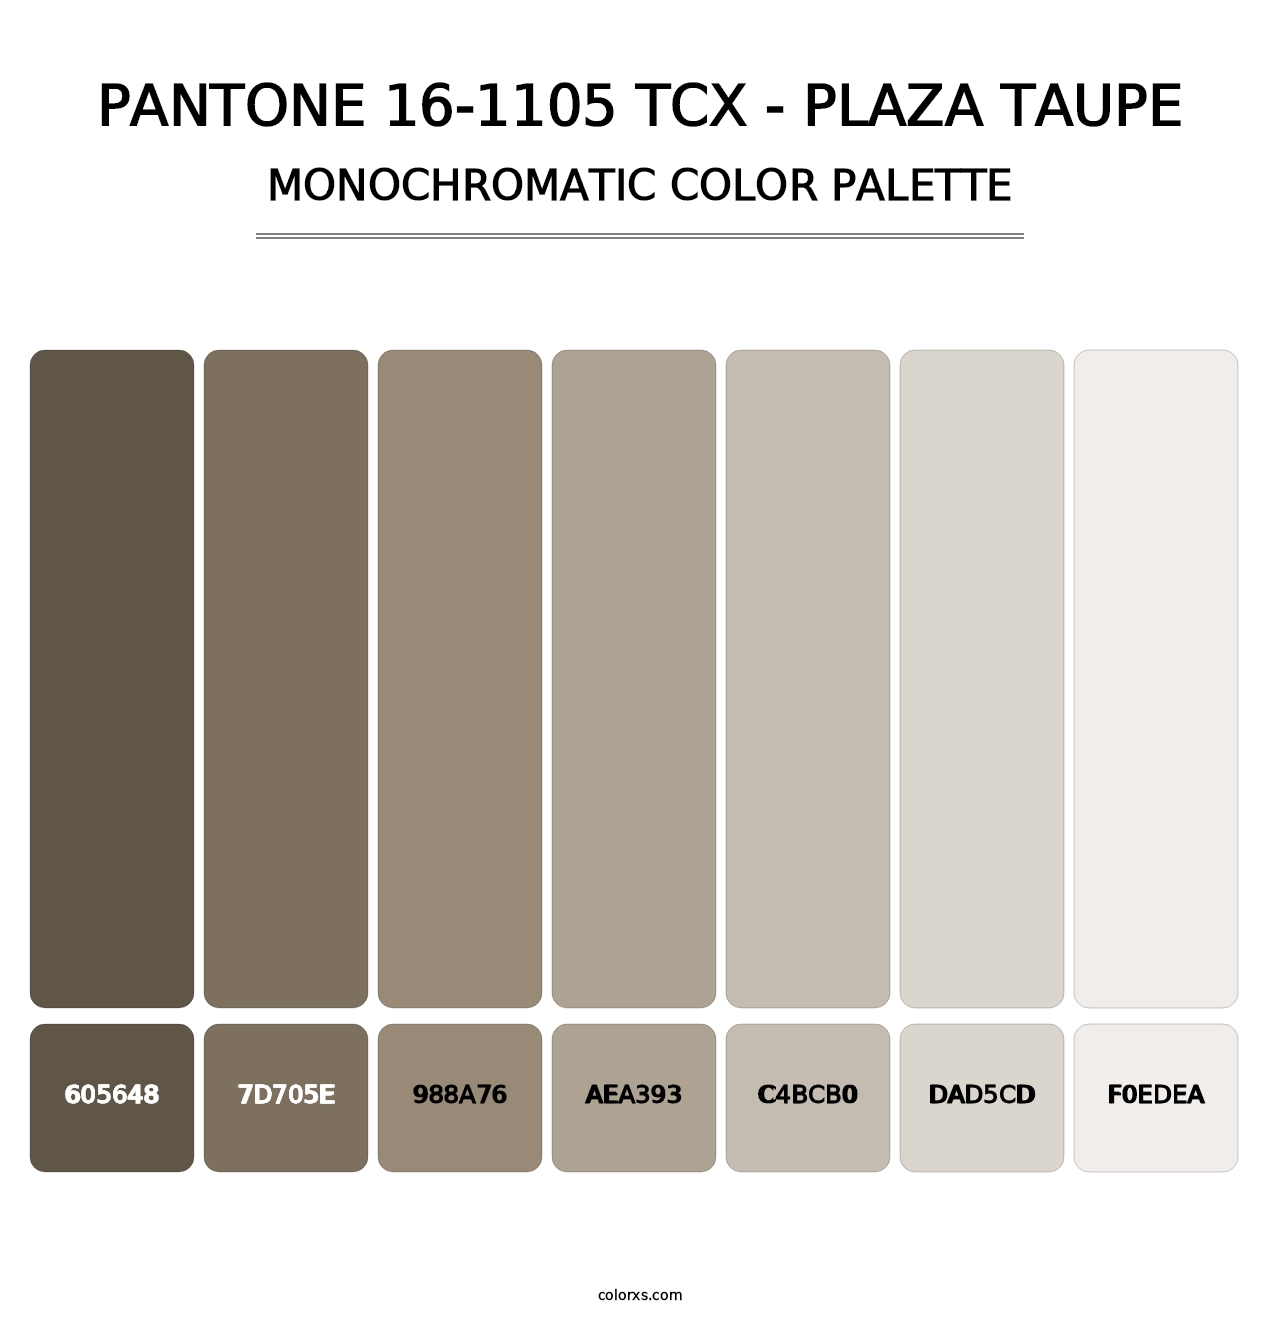 PANTONE 16-1105 TCX - Plaza Taupe - Monochromatic Color Palette